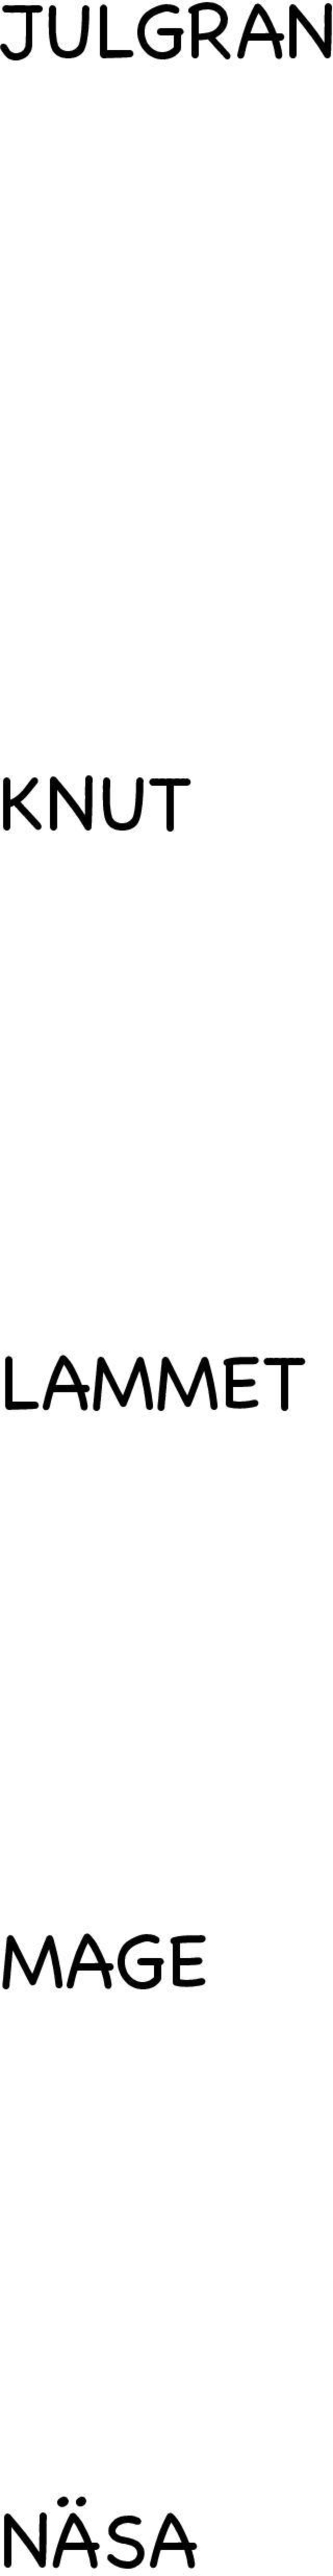 LAMMET